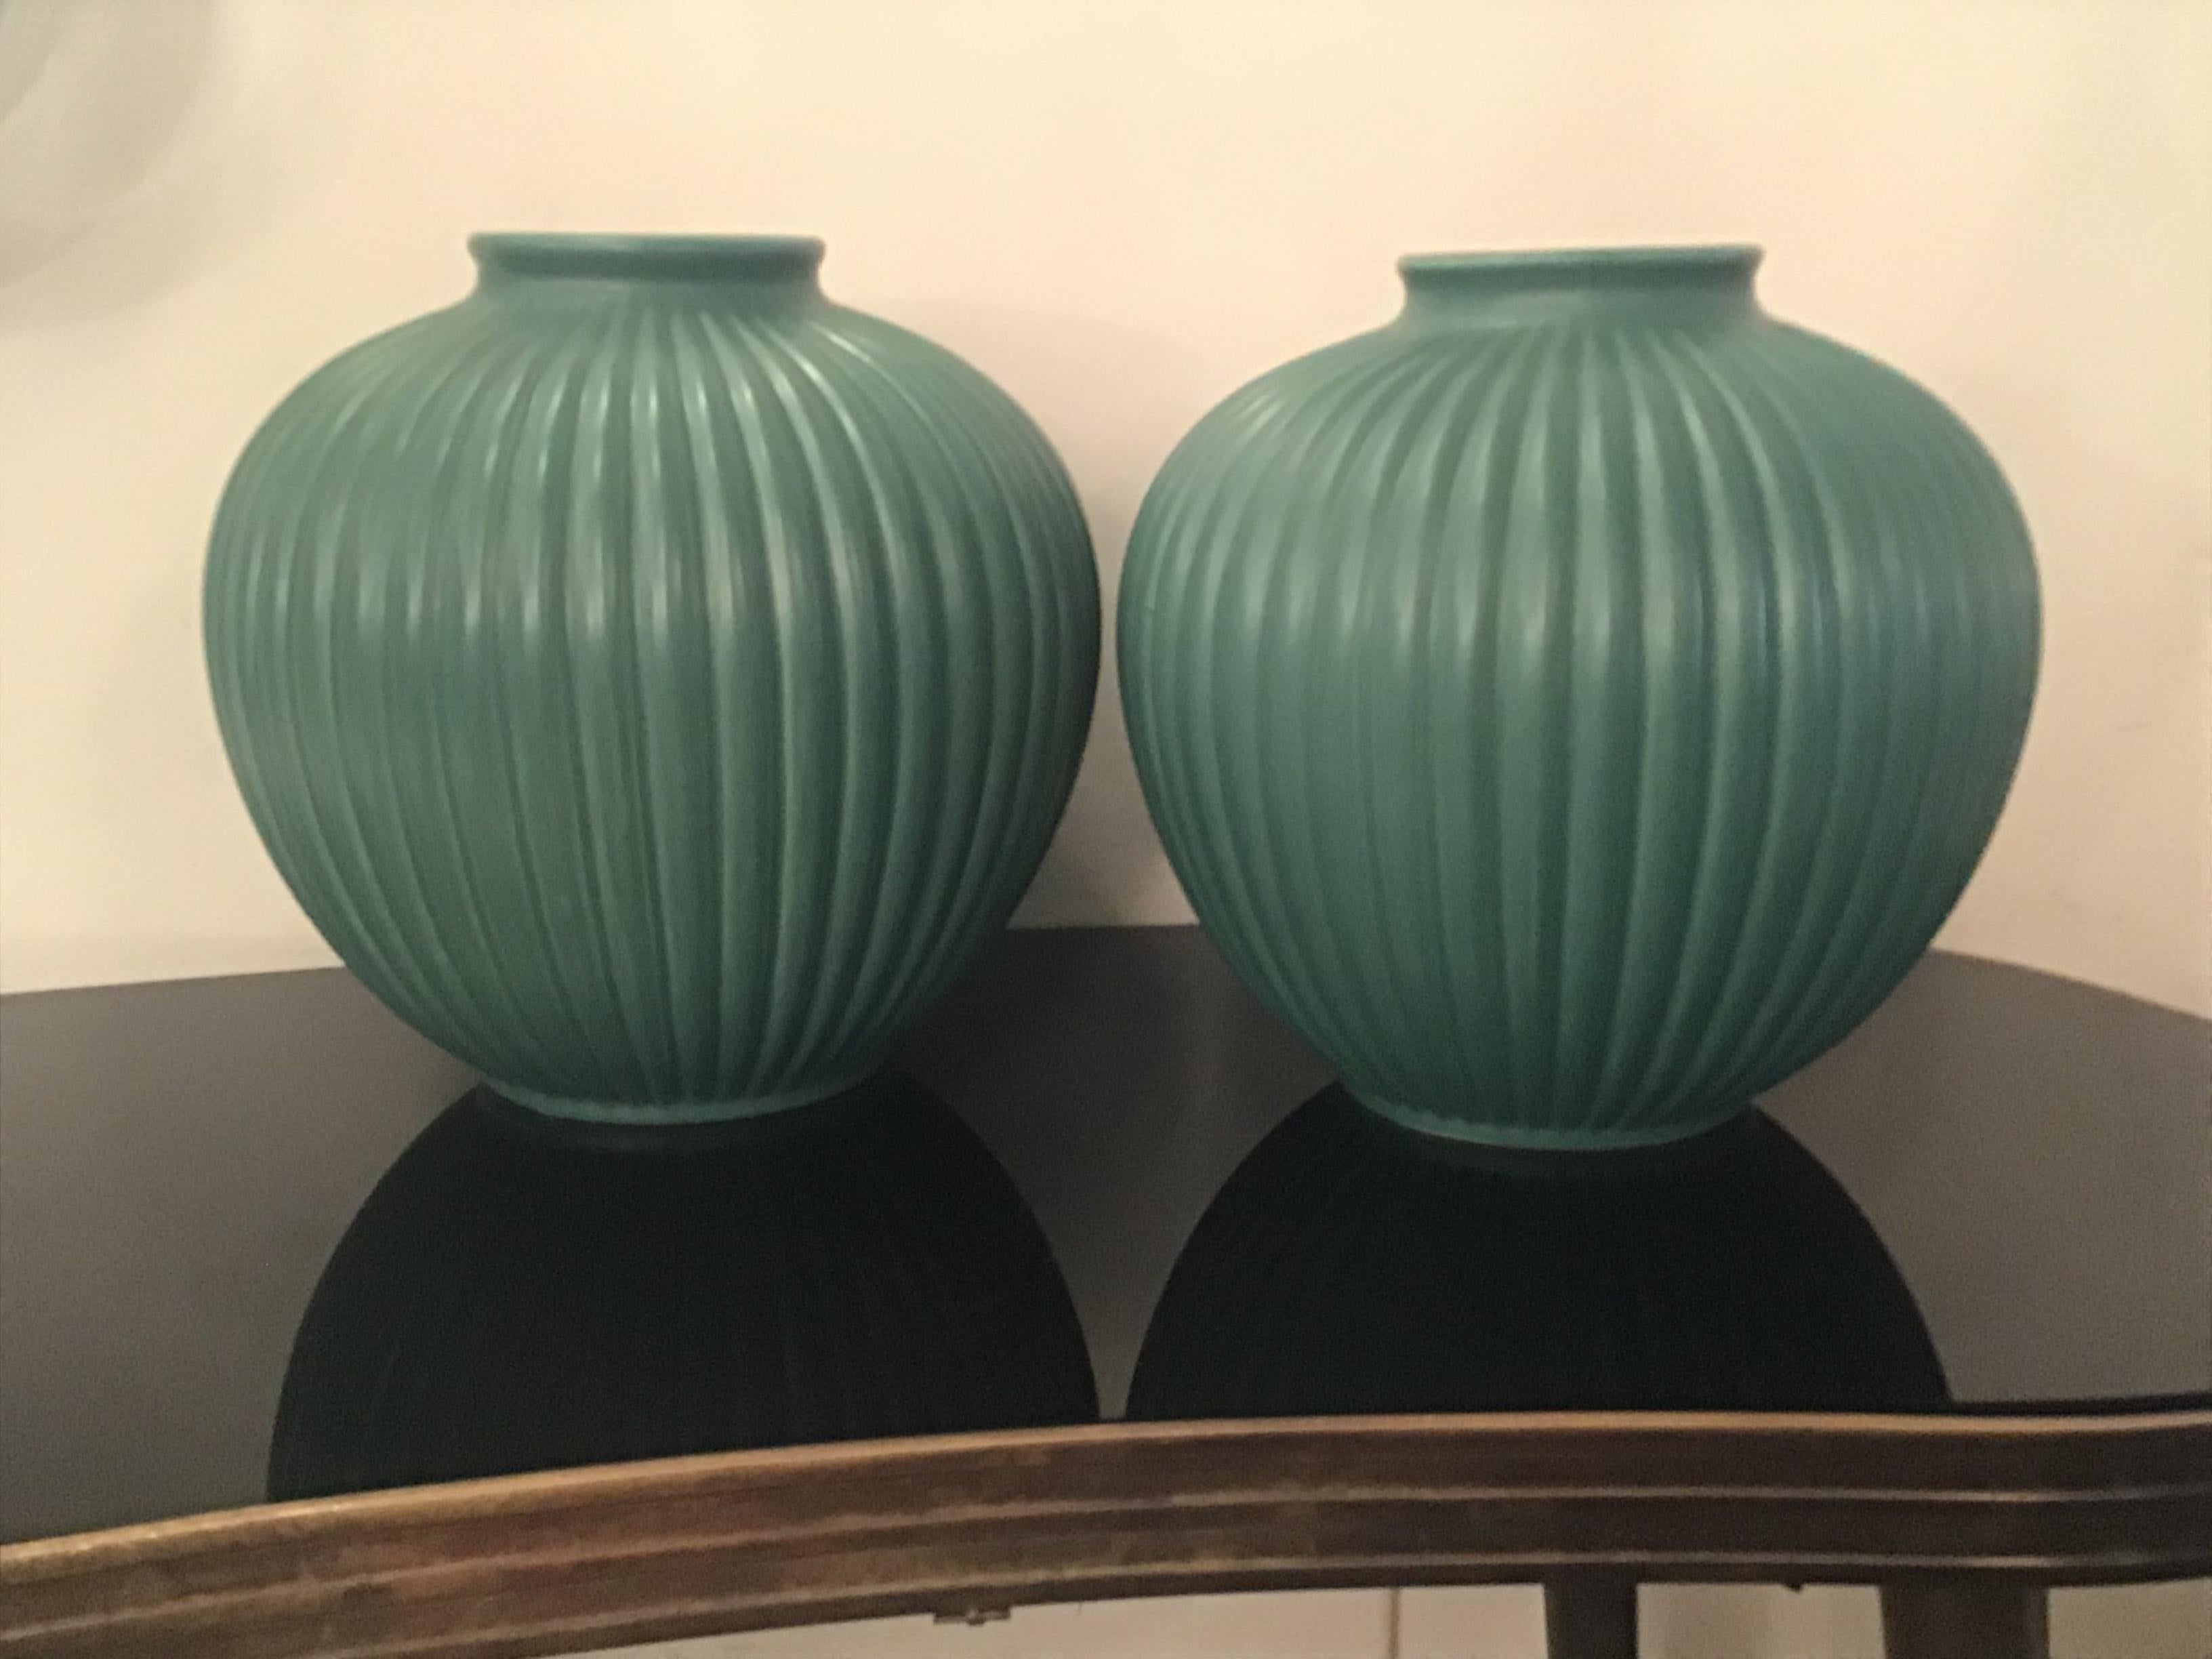 Richard Ginori Giovanni Gariboldi Pair of Vases Green Ceramic 1950 Italy For Sale 8